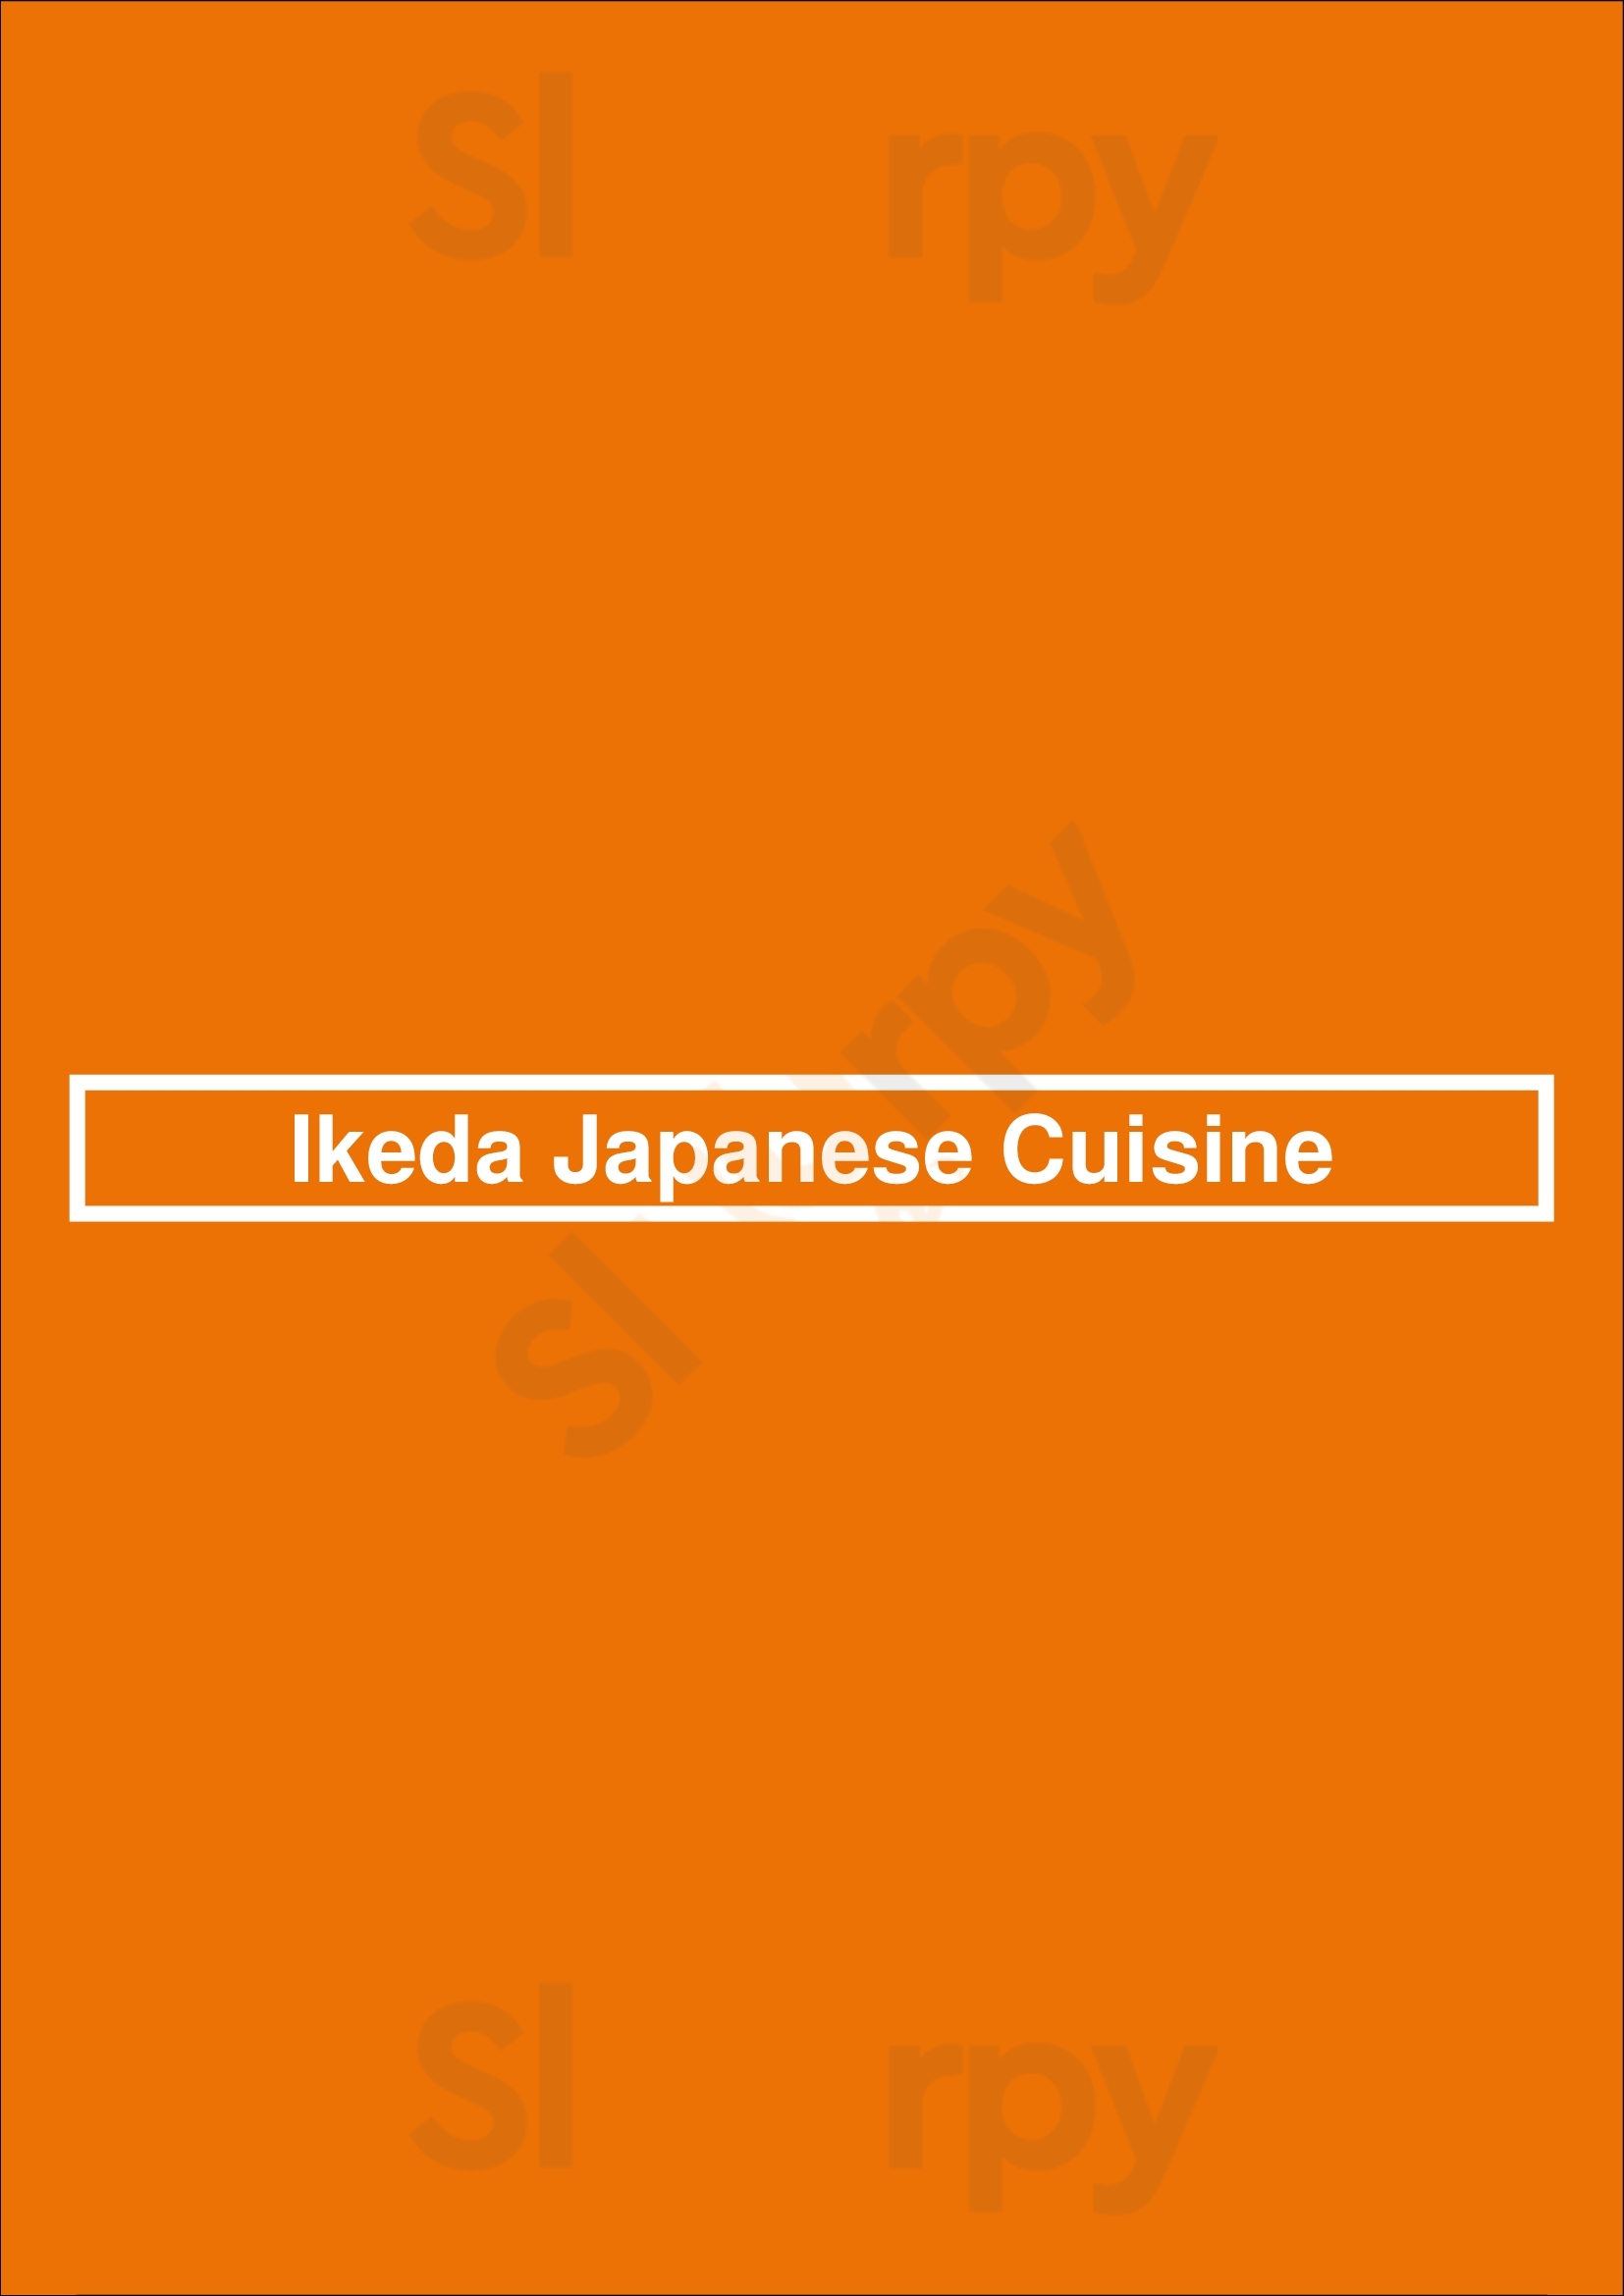 Ikeda Japanese Cuisine Porto Menu - 1